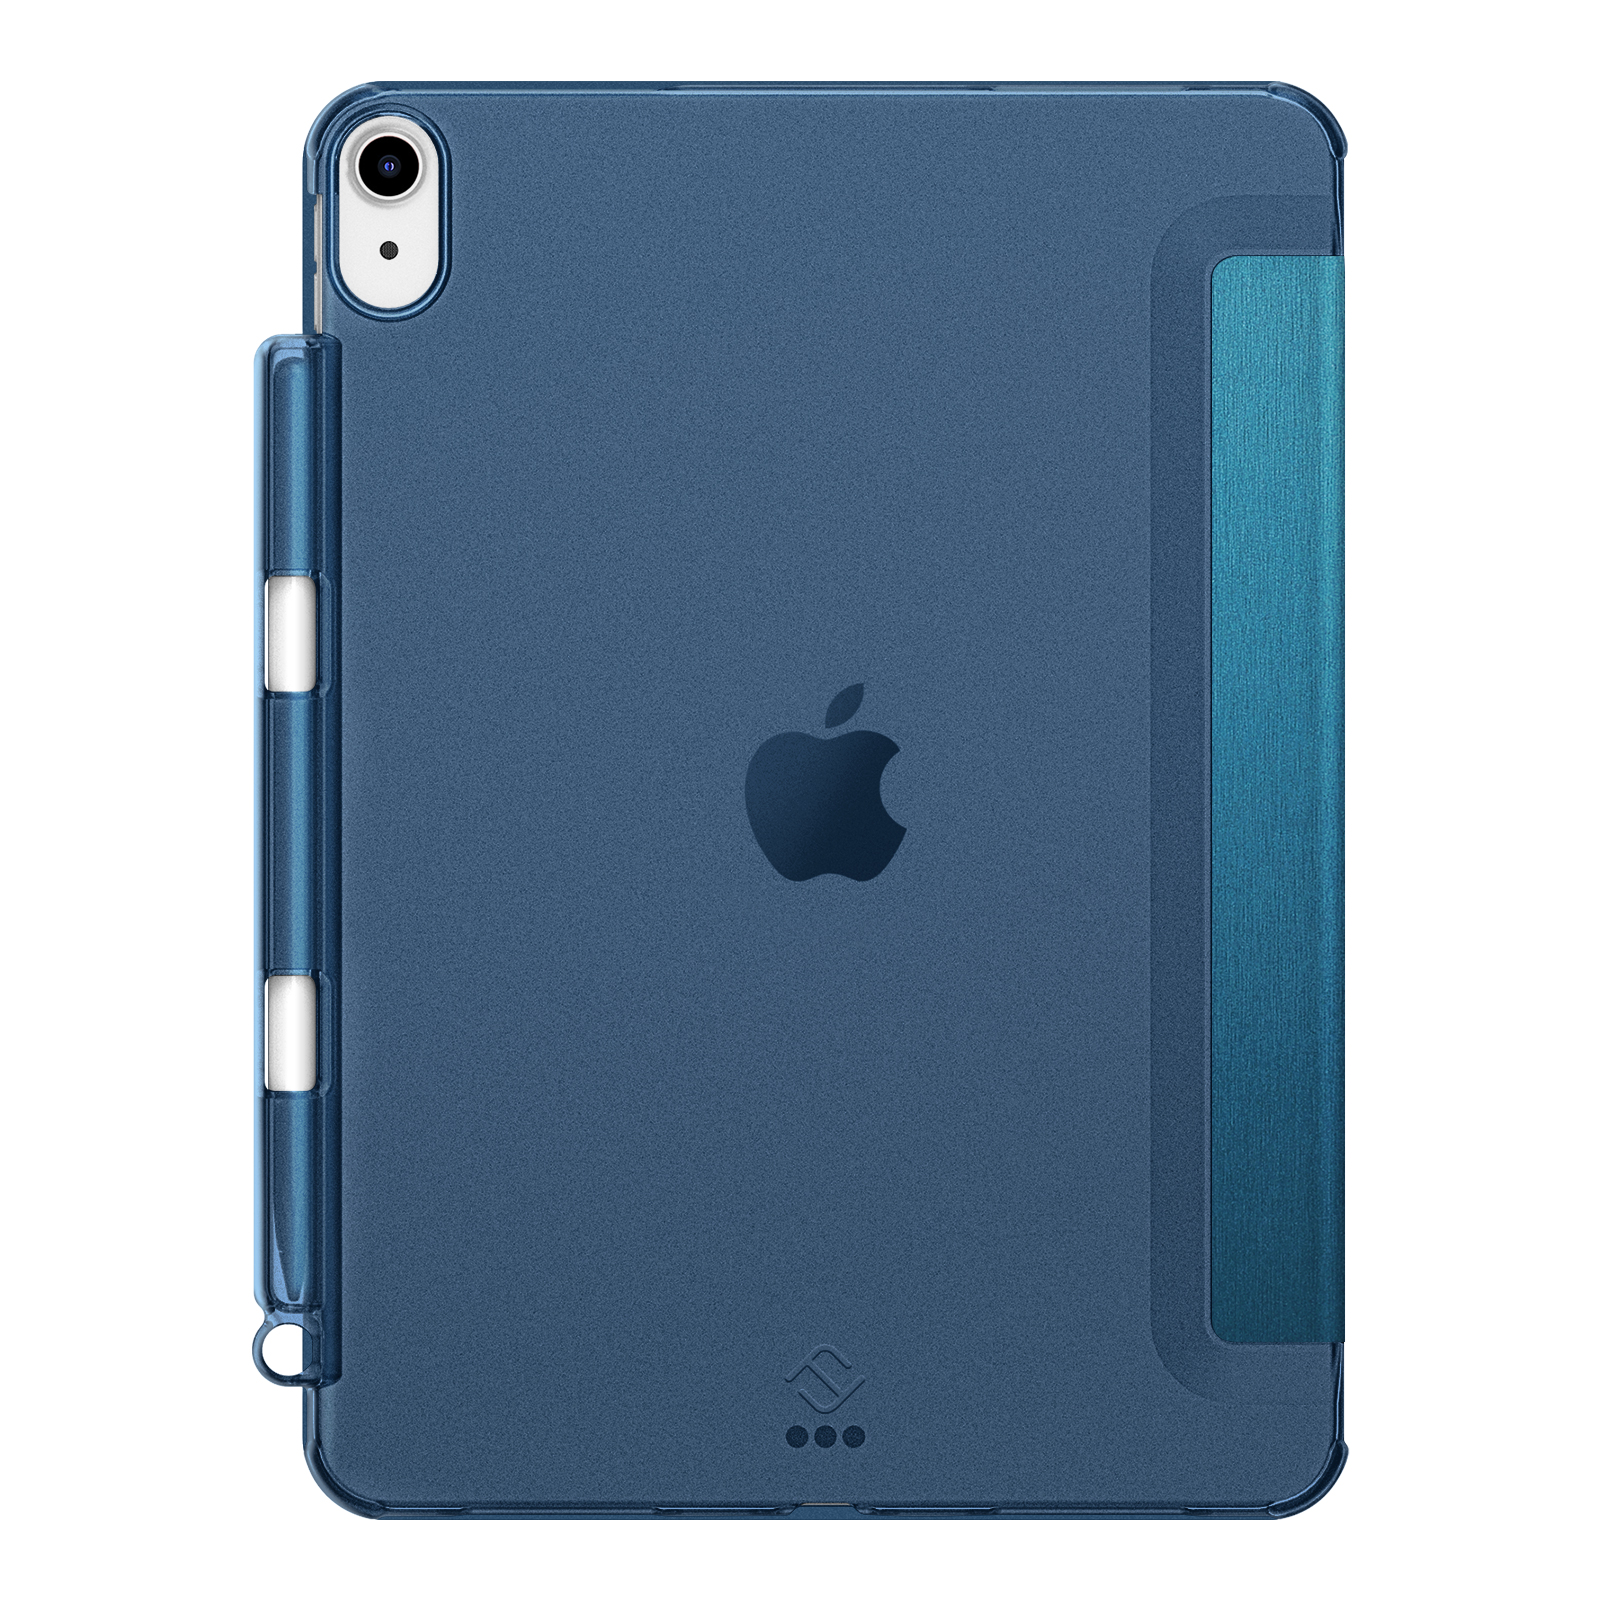 Blau Hülle, 2020, FINTIE Air iPad Generation Bookcover, 10.9 Zoll iPad, 4.